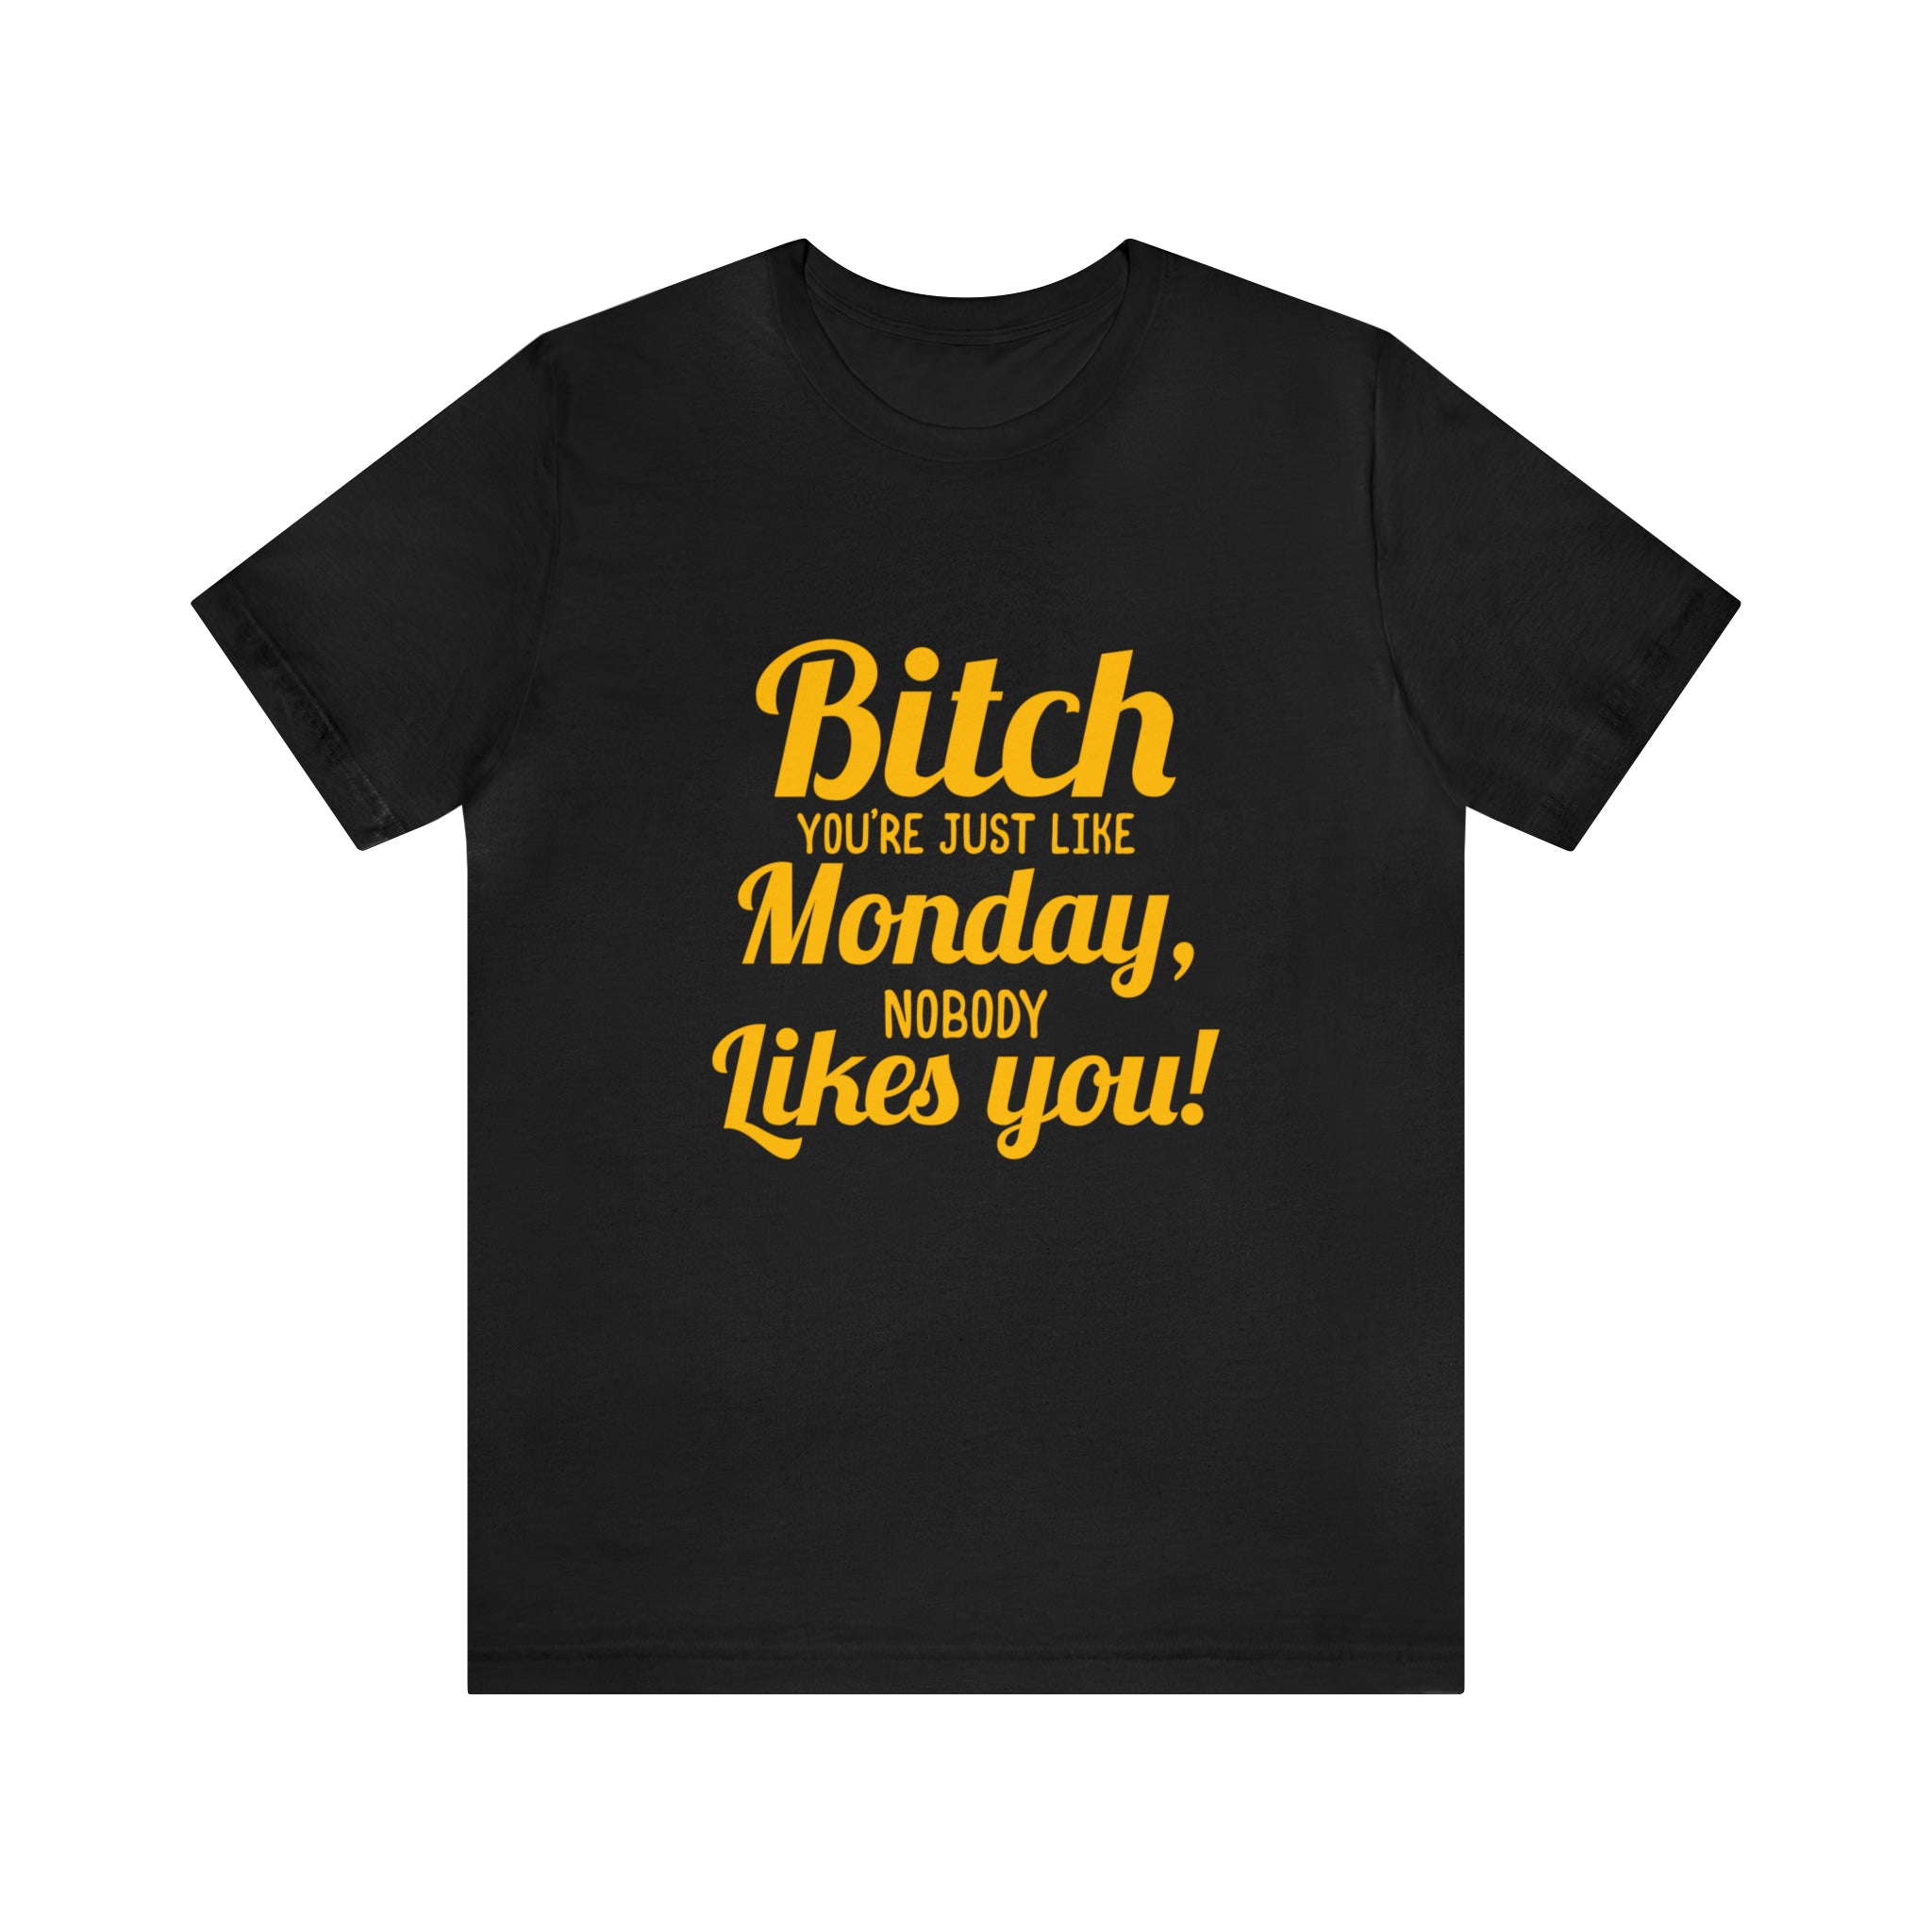 A stylish black Bitch you are just like Monday nobody likes you T-shirt.